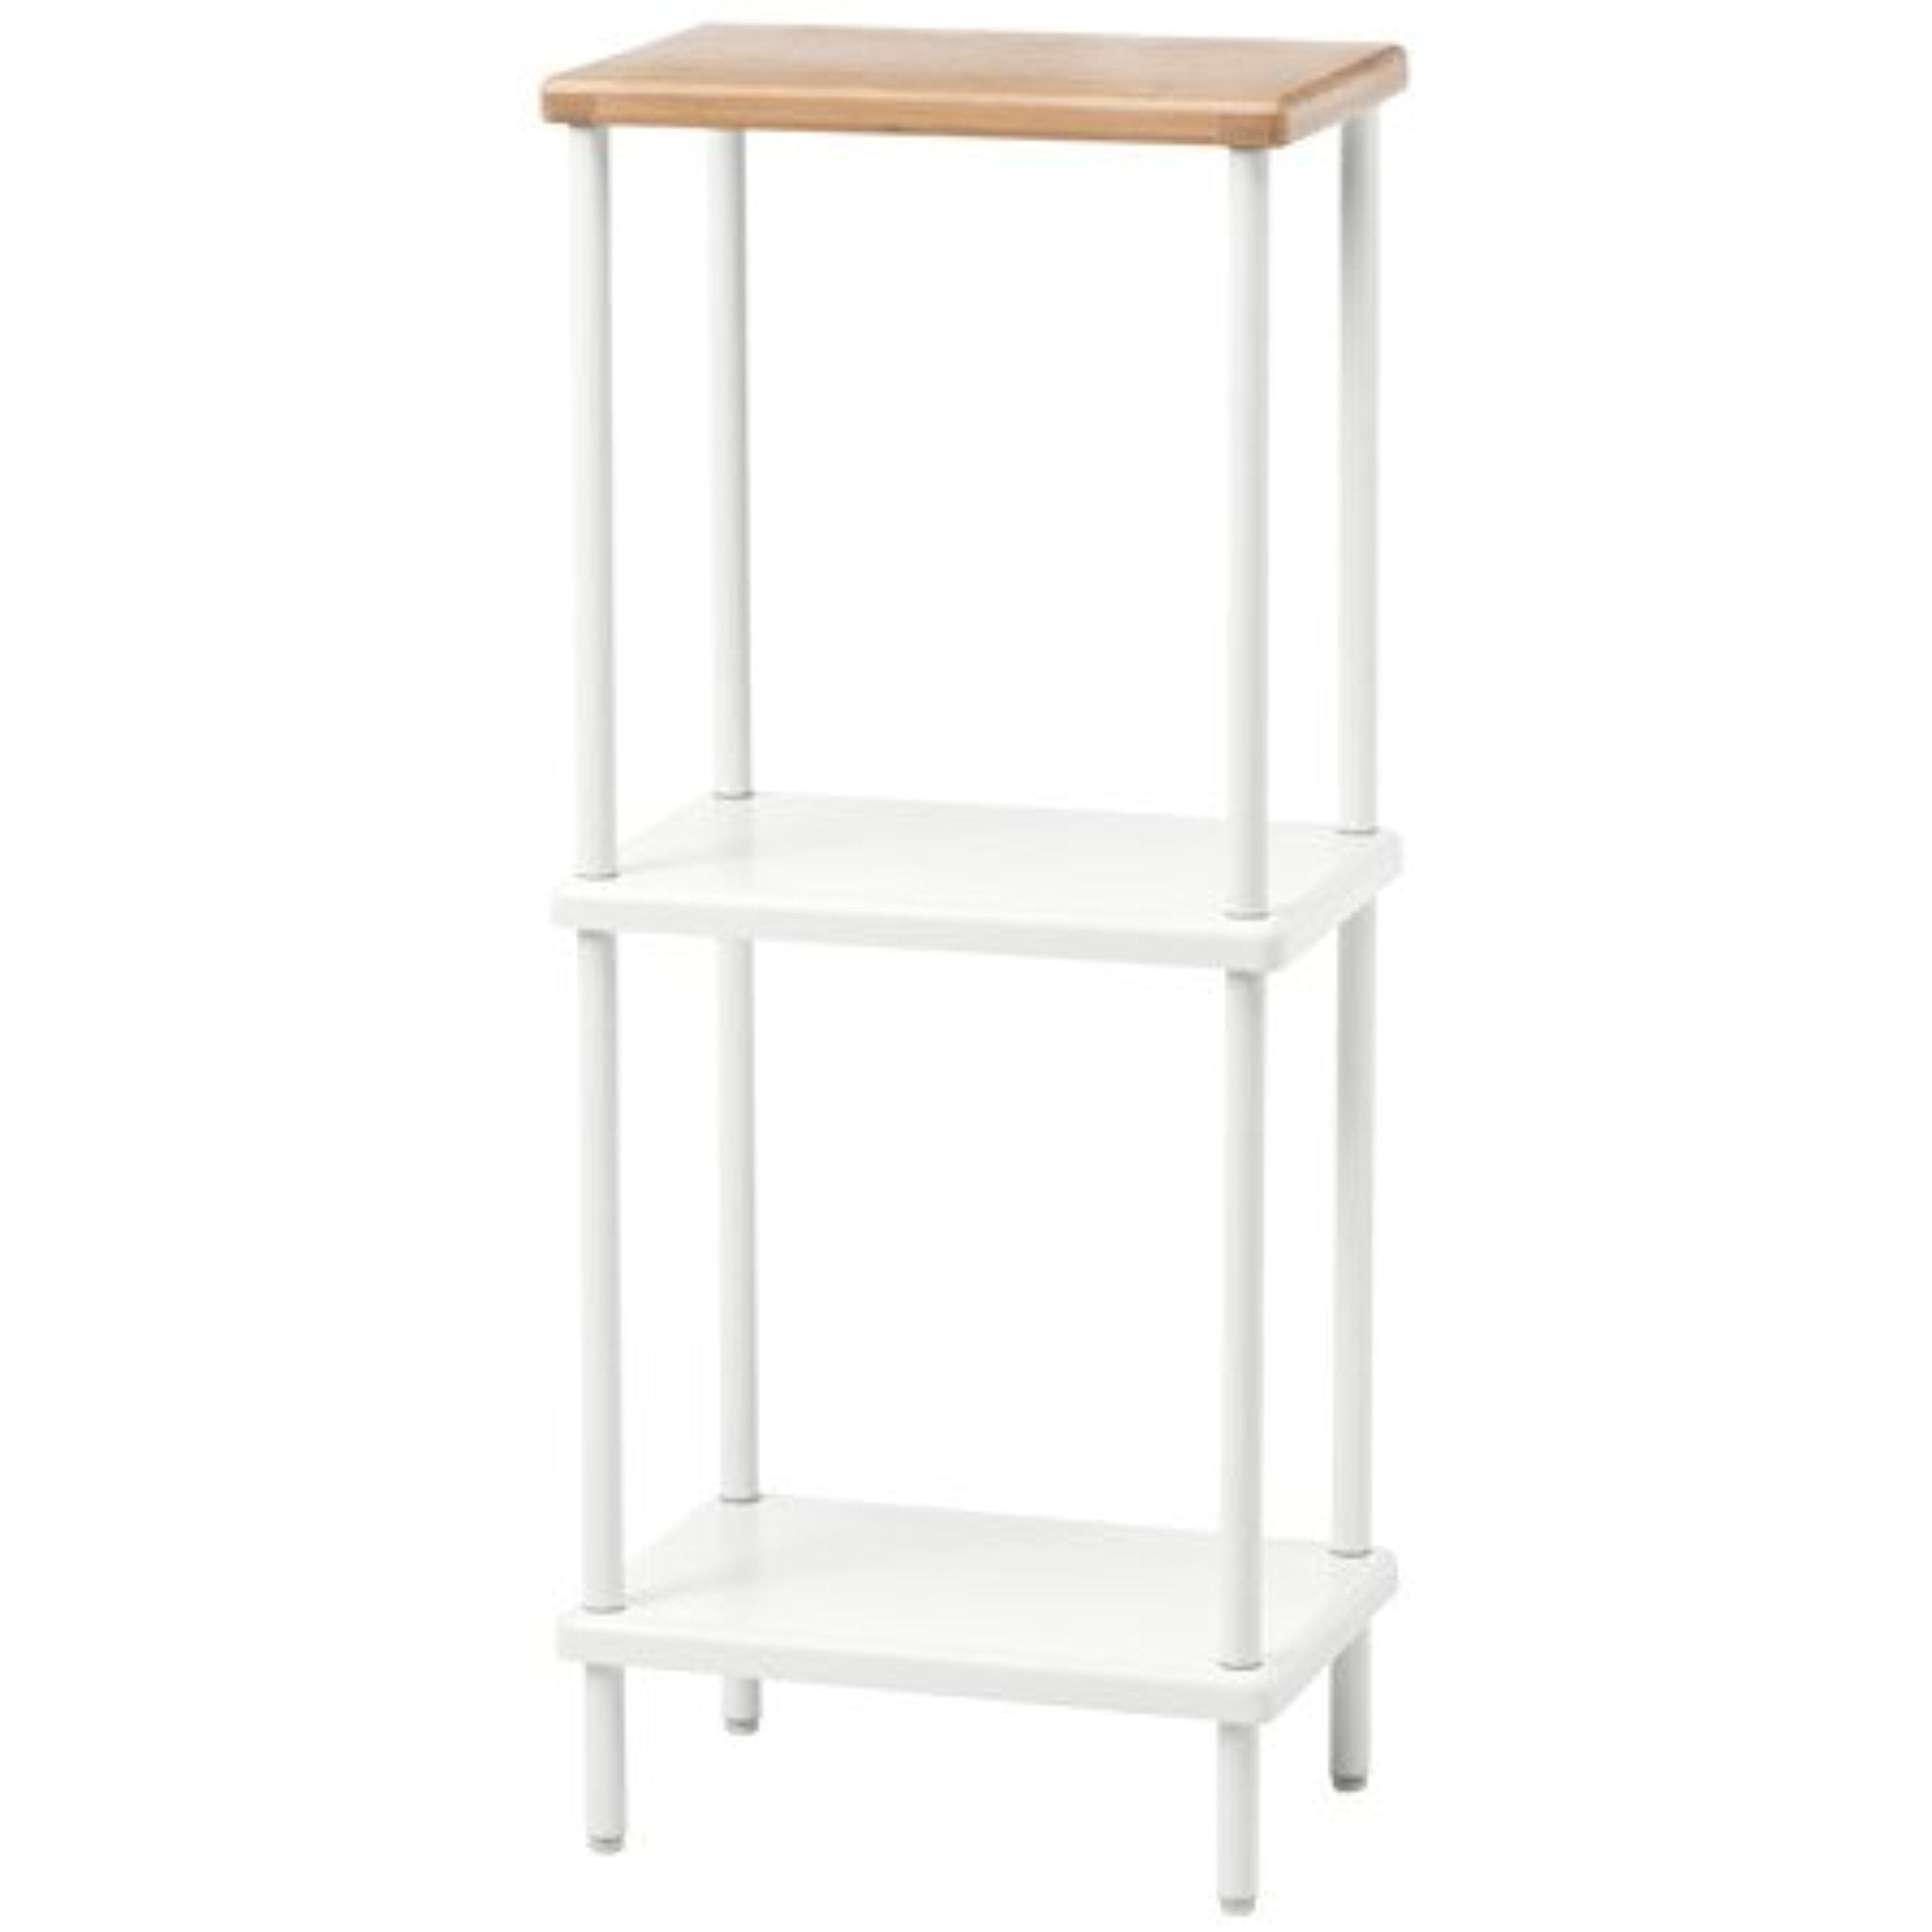 RÅGRUND Shelf unit, bamboo, 145/8x145/8x41 - IKEA